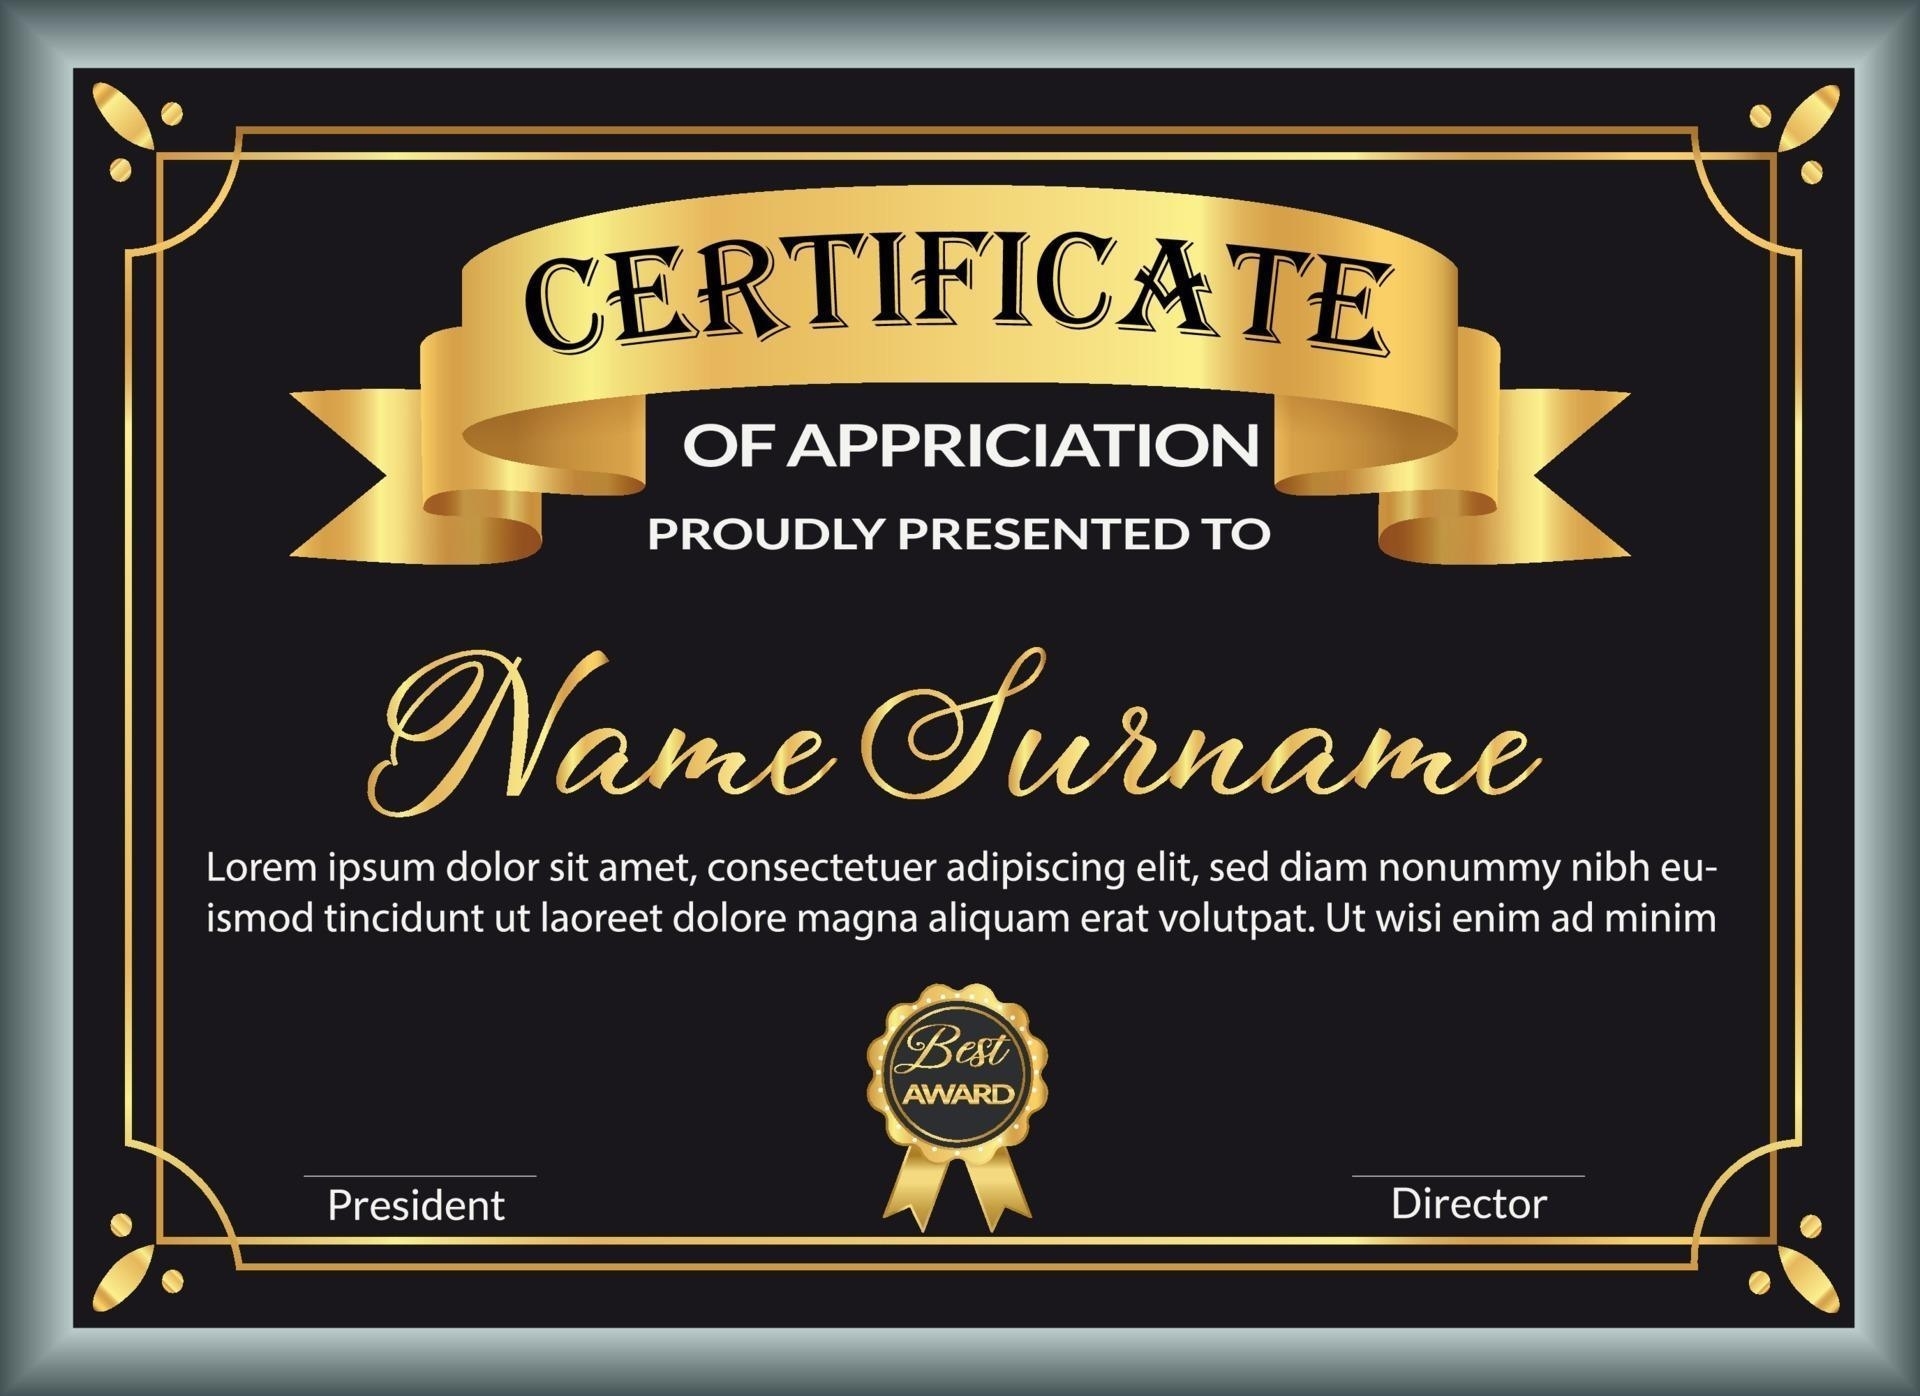 Best Award Certificate Design Template 2326771 Vector Art At Vecteezy In Sales Certificate Template